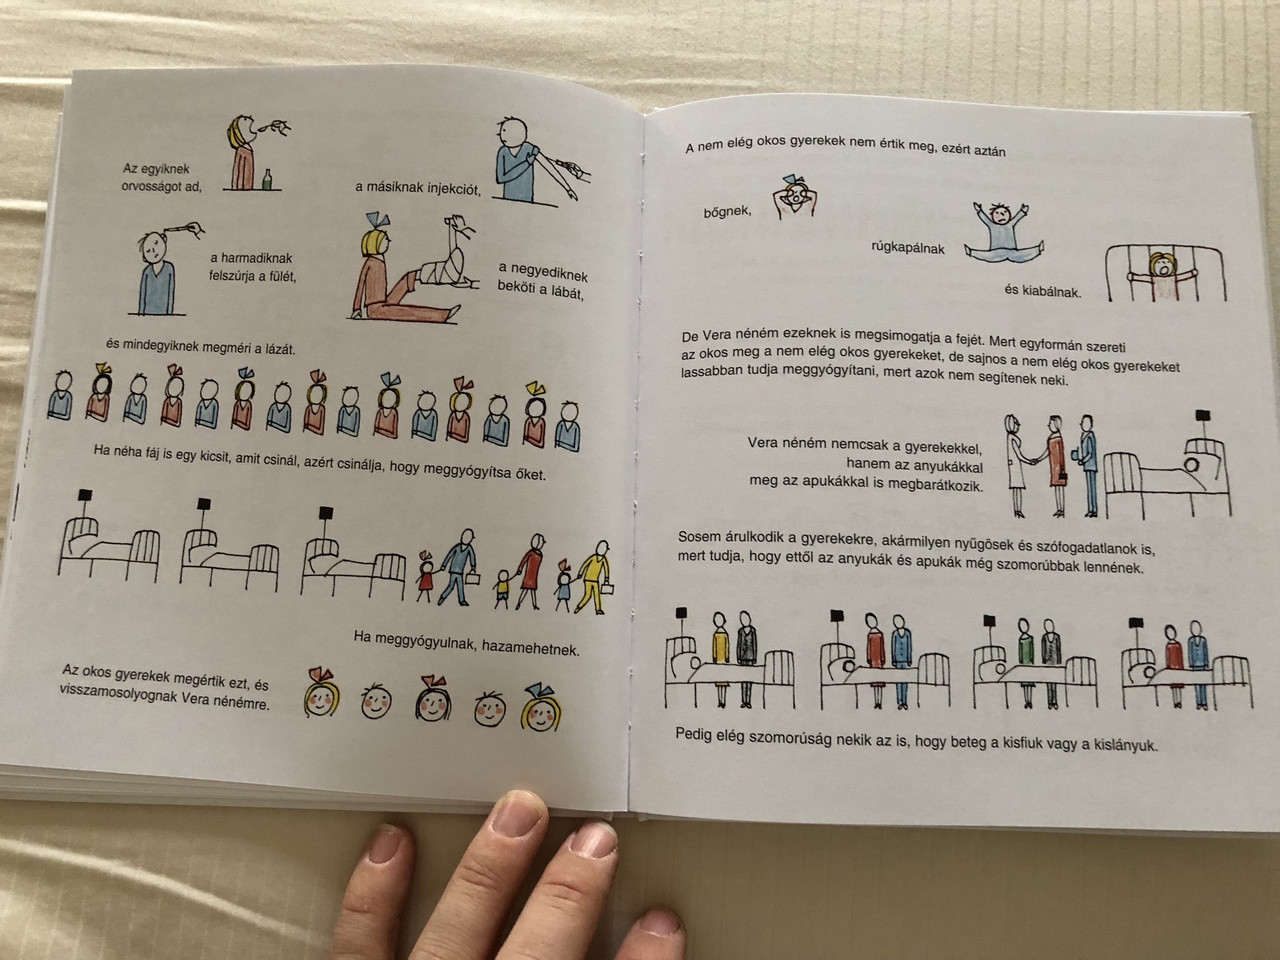 Te is tudod? - Did you know? by Janikovszki Éva / Hungarian Language Book  For Children - bibleinmylanguage